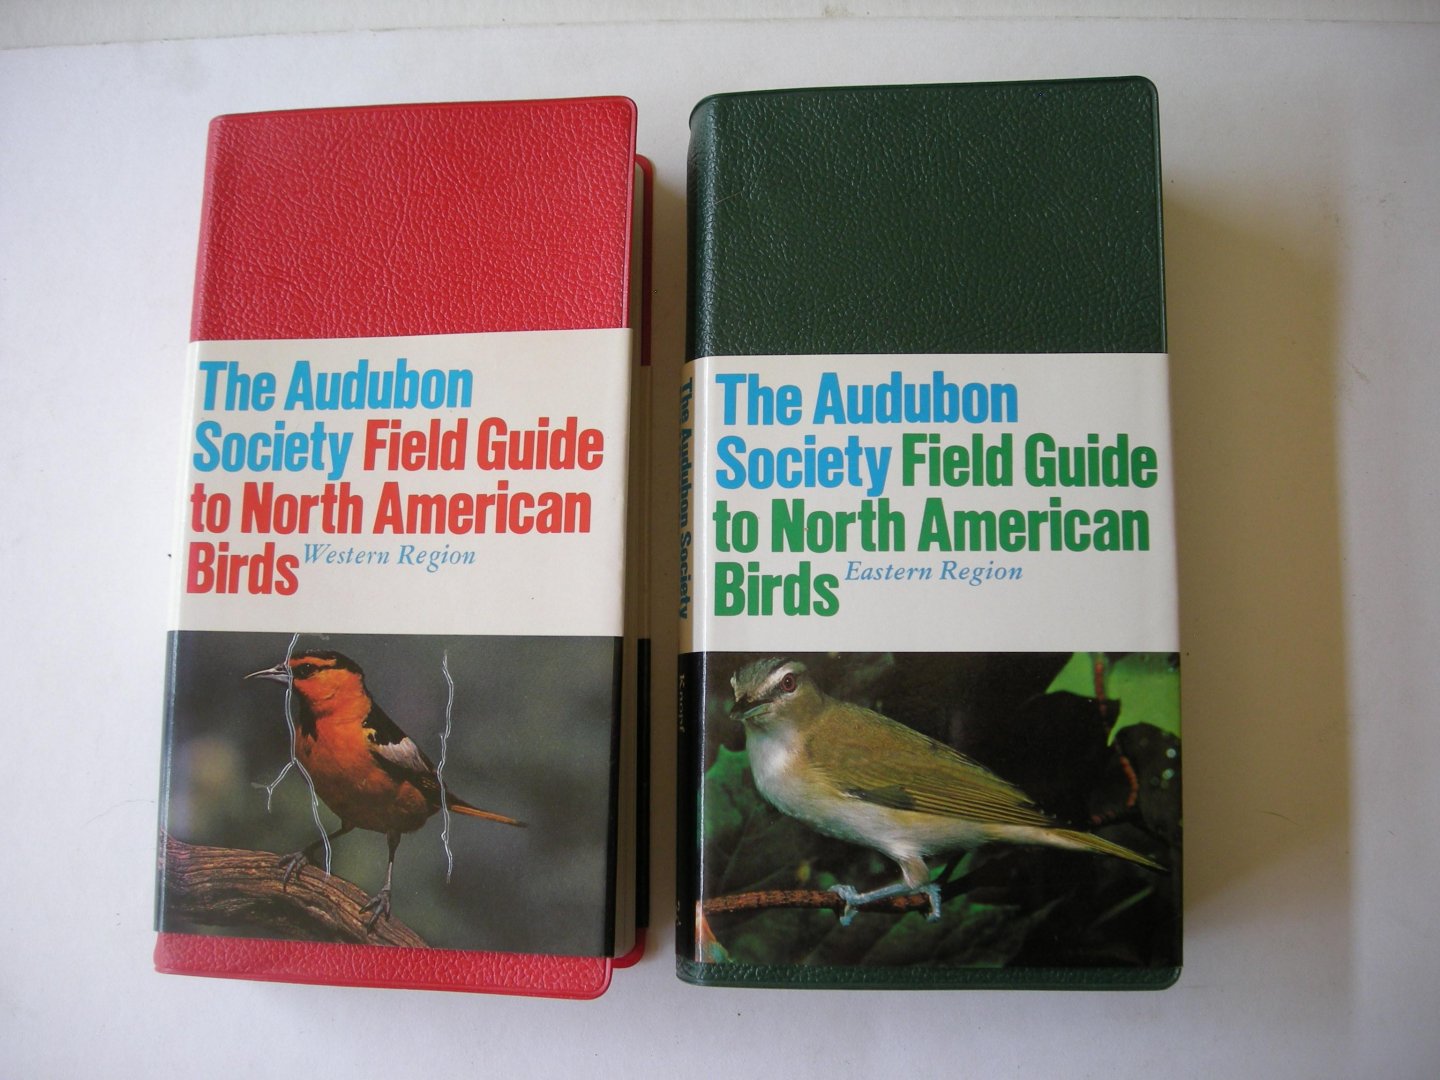 Bull, J. and Farrand, J. - The Audubon Society Field Guide to North American Birds, Eastern Region